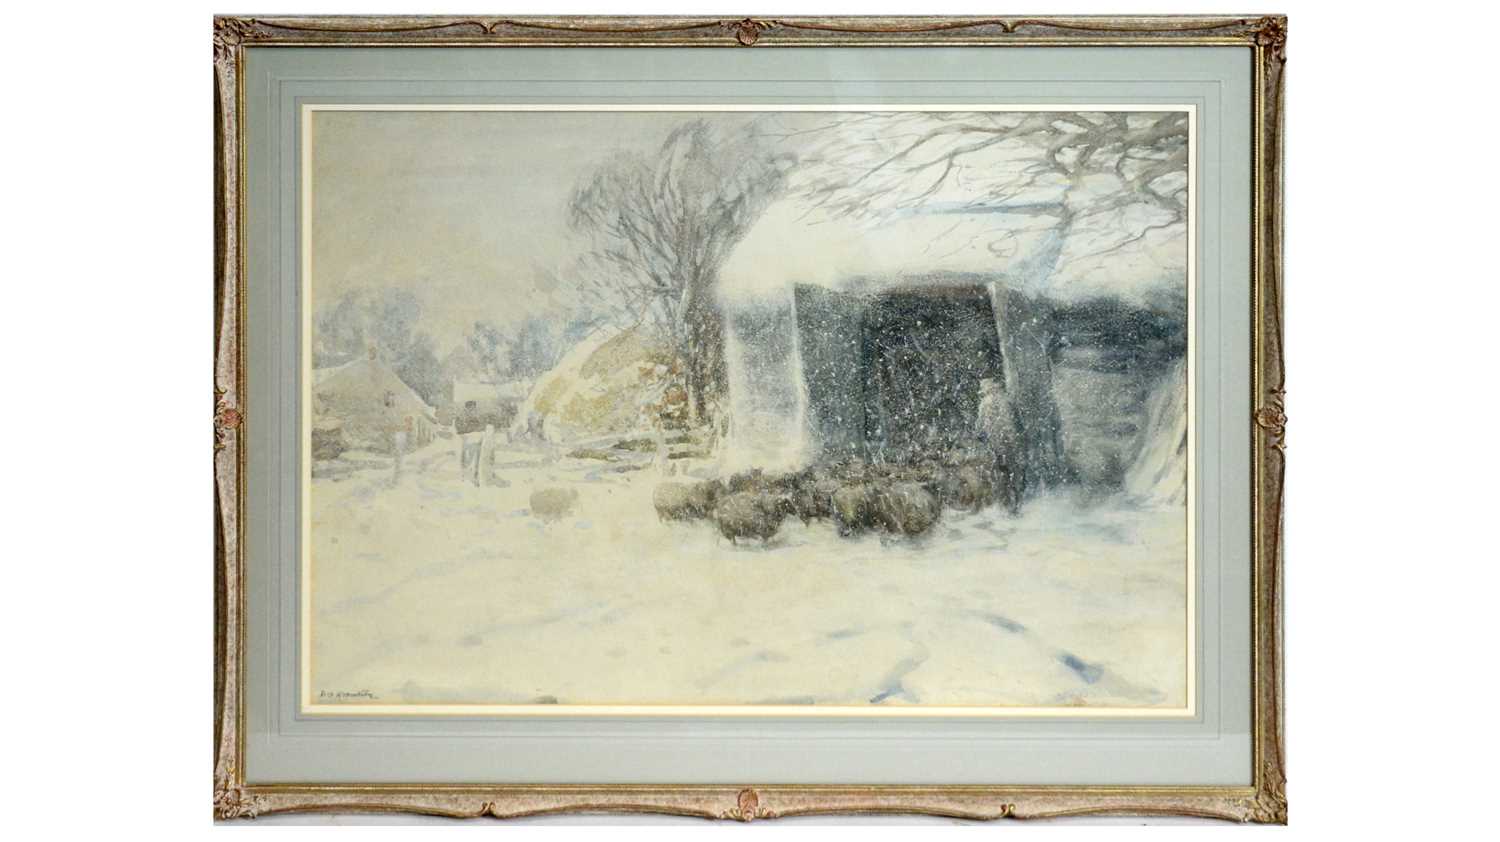 Lot 615 - David Thomas Robertson - Warm Refuge in a Snowstorm | watercolour